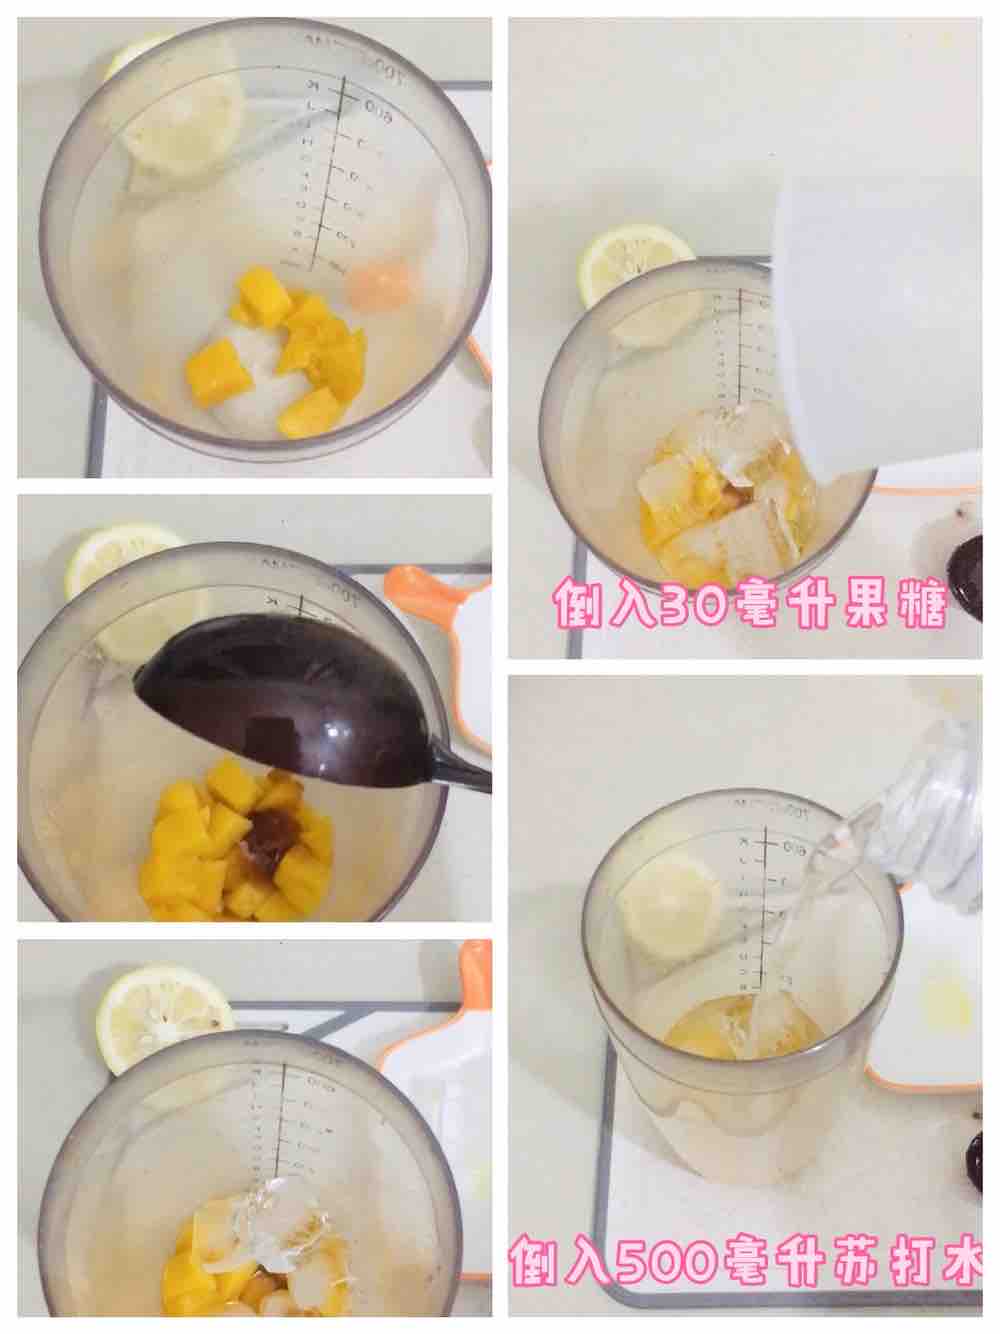 Lemon Mango Soda recipe